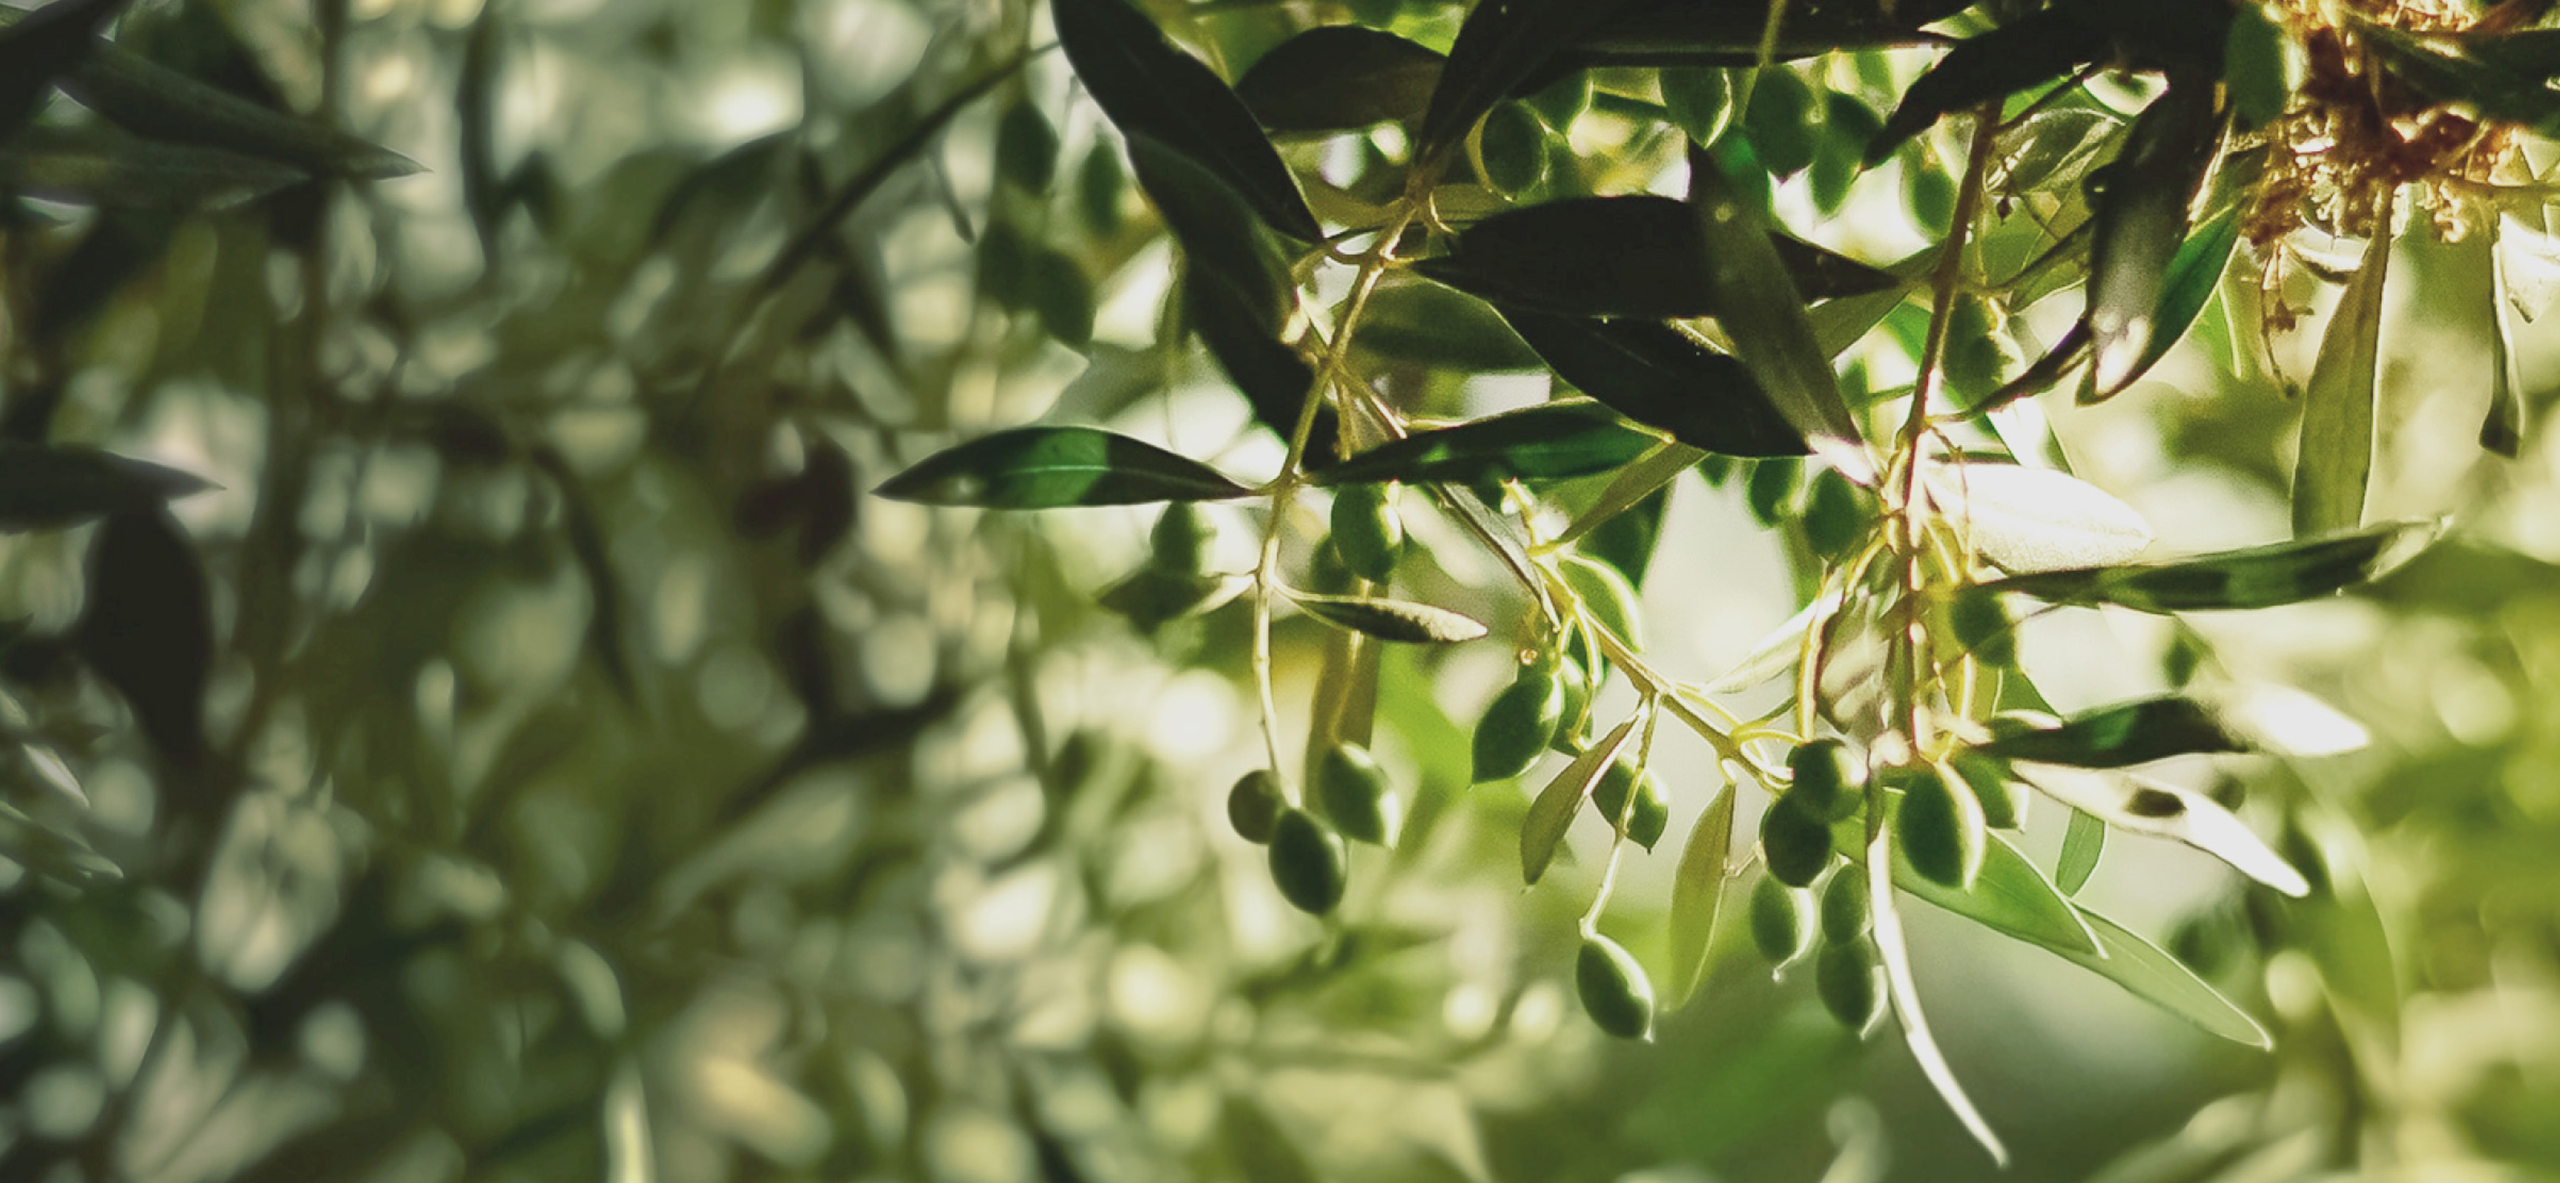 certified origins olive tree